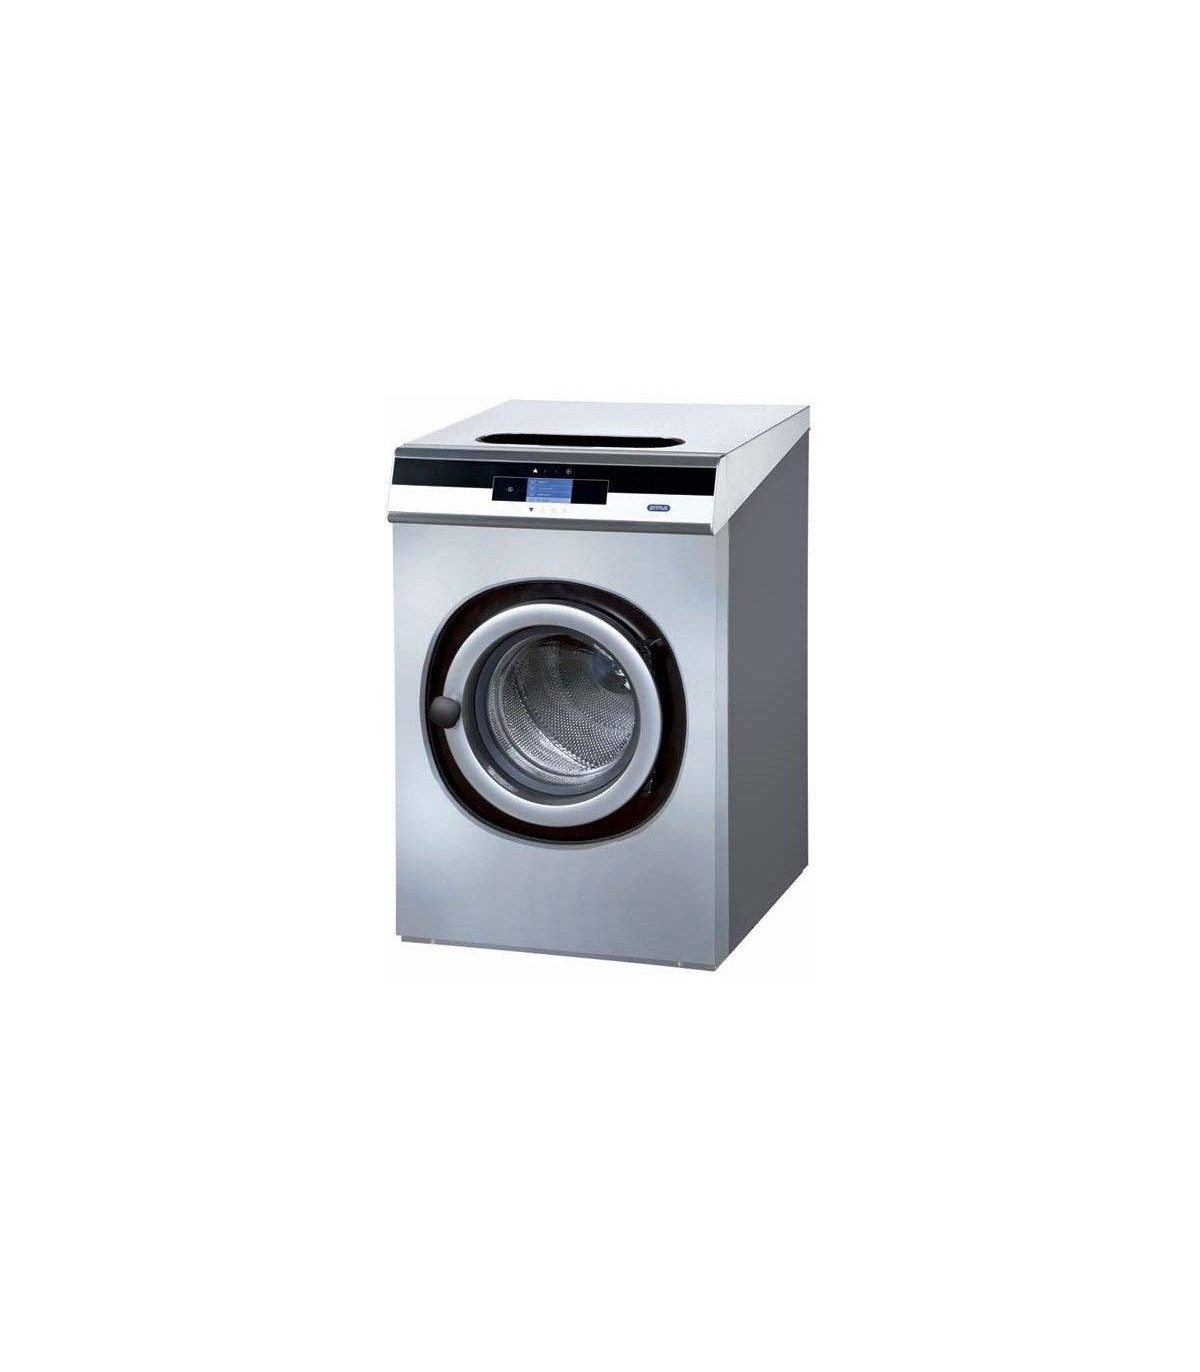 Protège machine à laver - Tapis de machine à laver - Mer - Bateau - Requin  - 55x45 cm